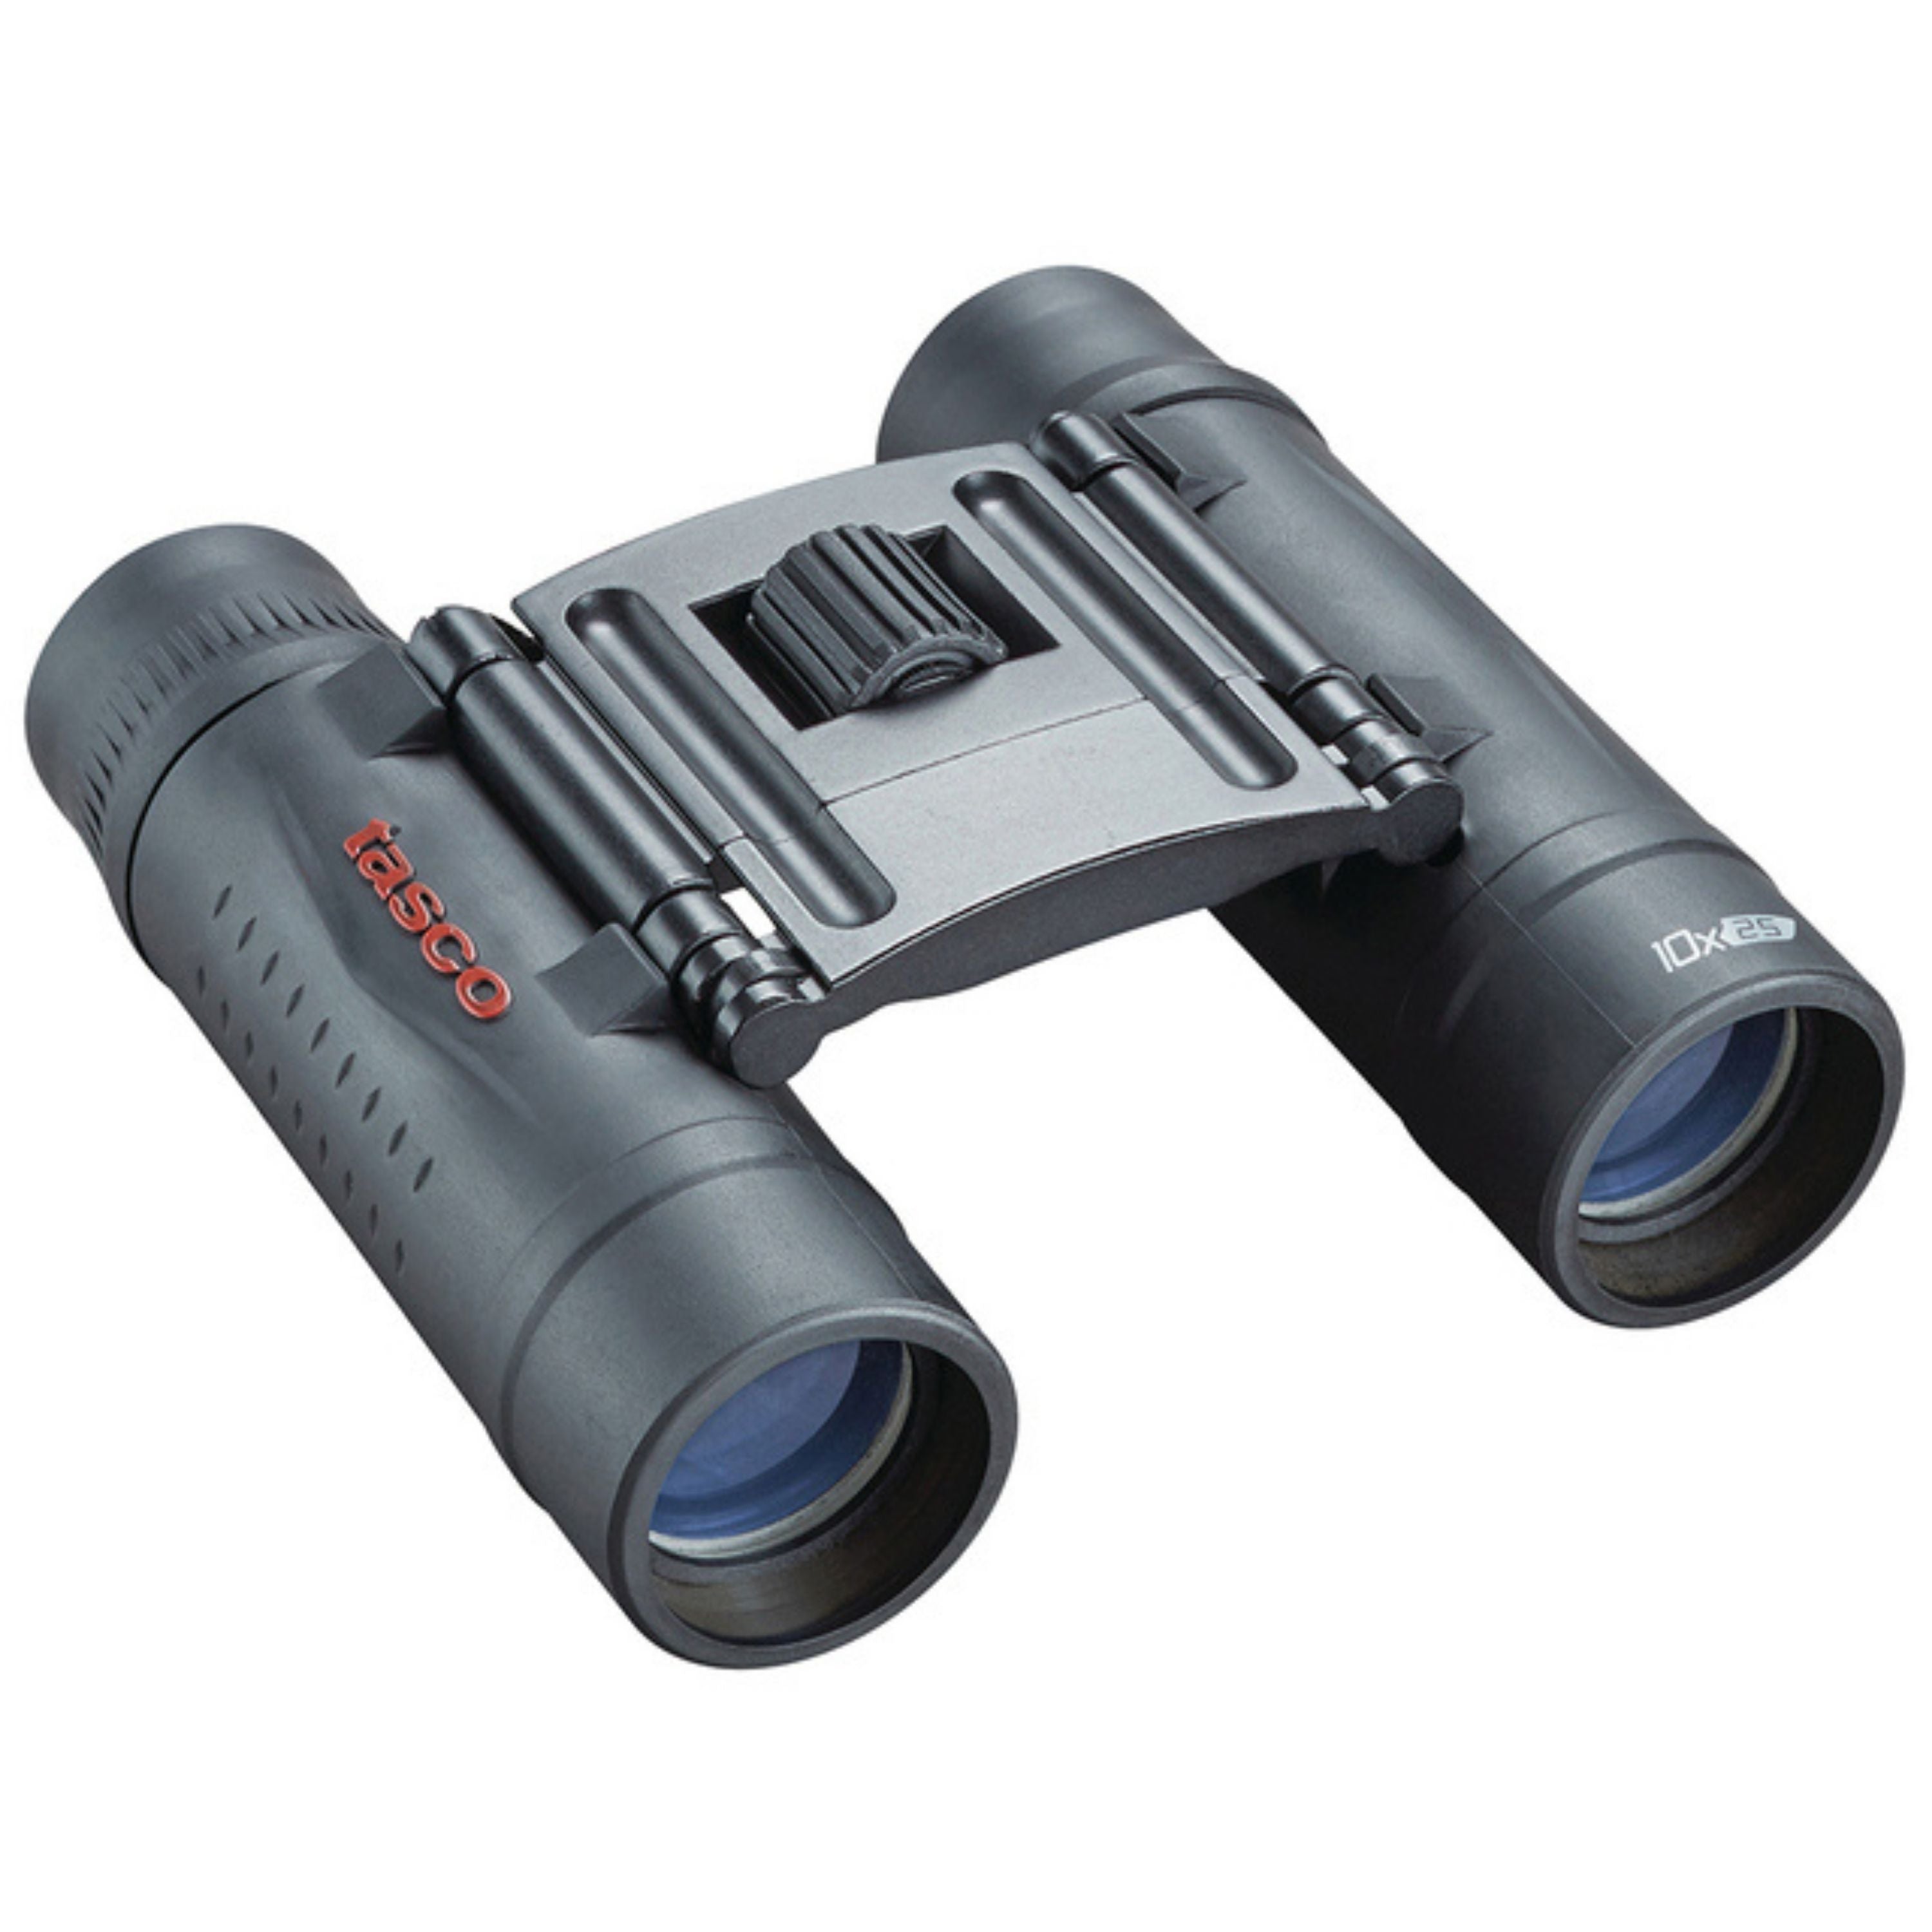 "Essentials" 10x25 mm Compact binocular